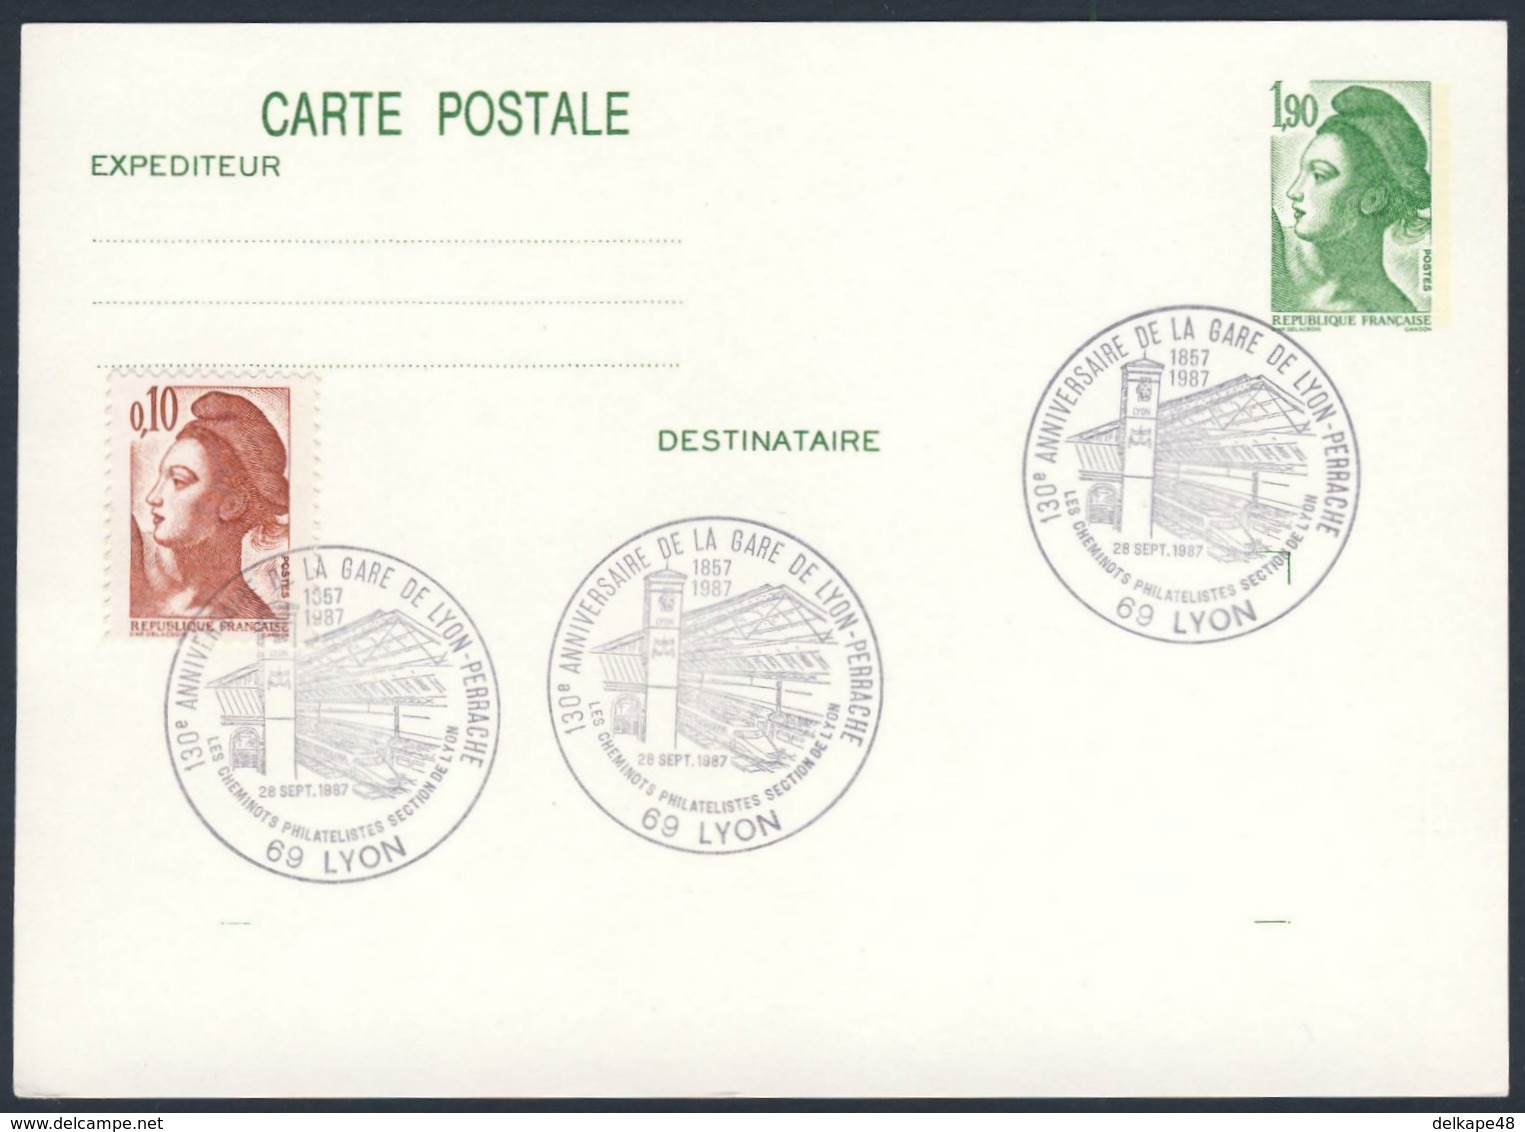 France Rep. Française 1987 Card / Karte / Carte - 130e Ann. Gare De Lyon-Perrache 1857-1987 / Railway Station / Bahnhof - Treinen